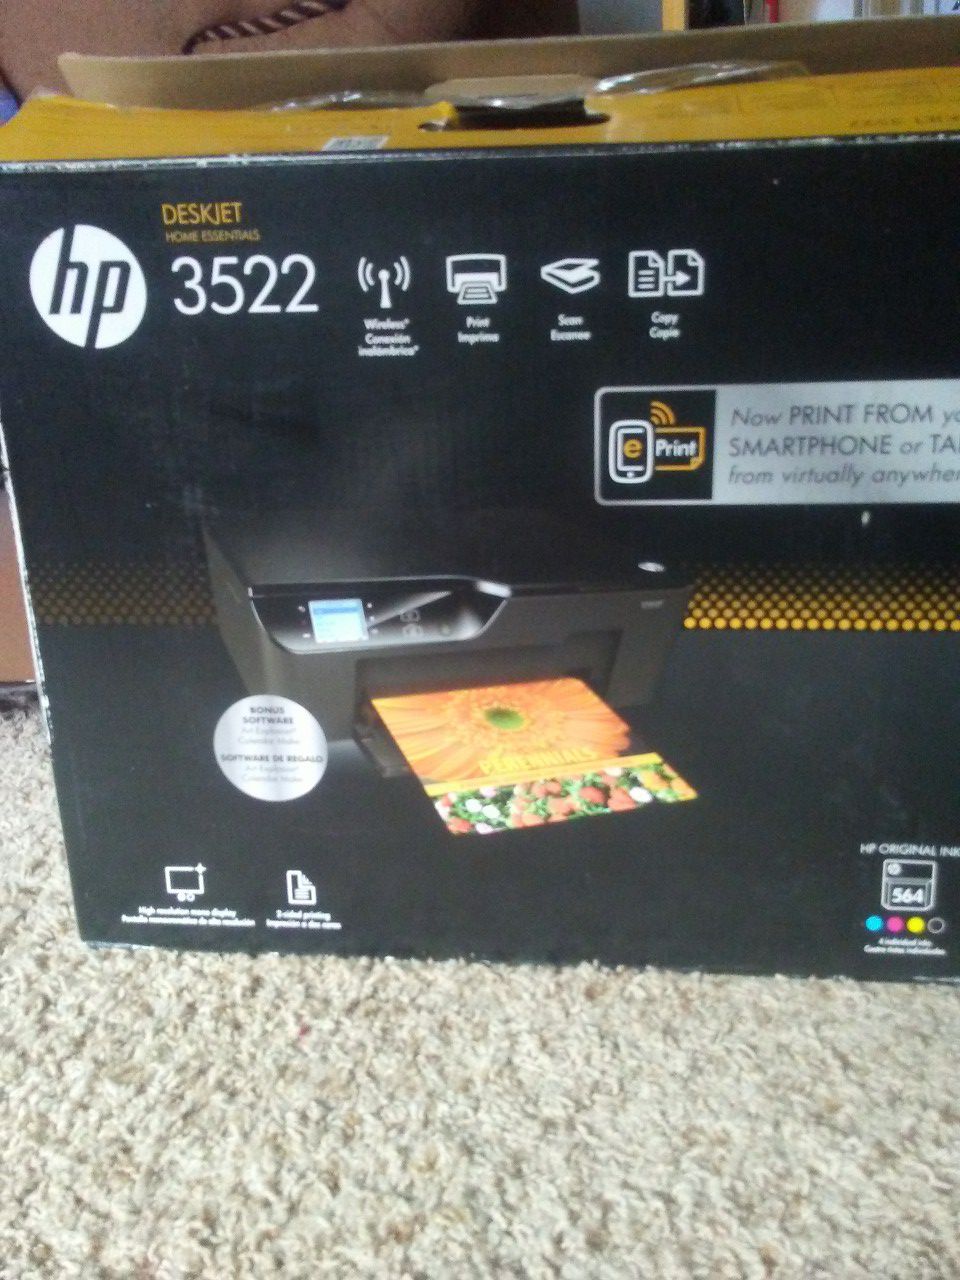 HP printer/scanner